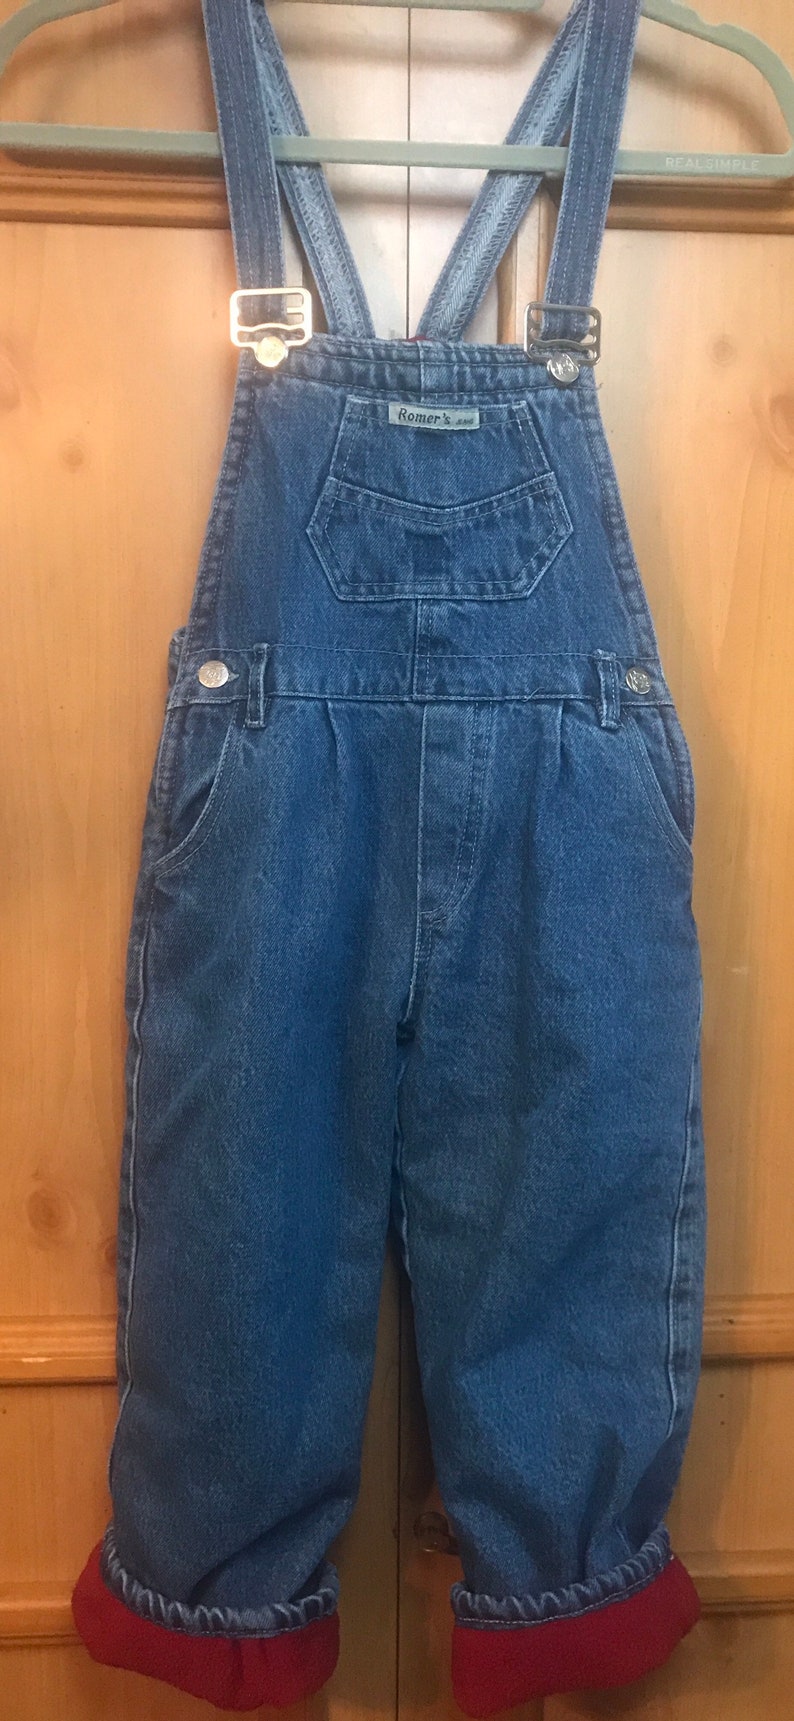 Vintage Denim Overalls,overalls,kids overalls,vintage denim,jean overalls,lined overalls,denim overalls,toddler overalls image 1